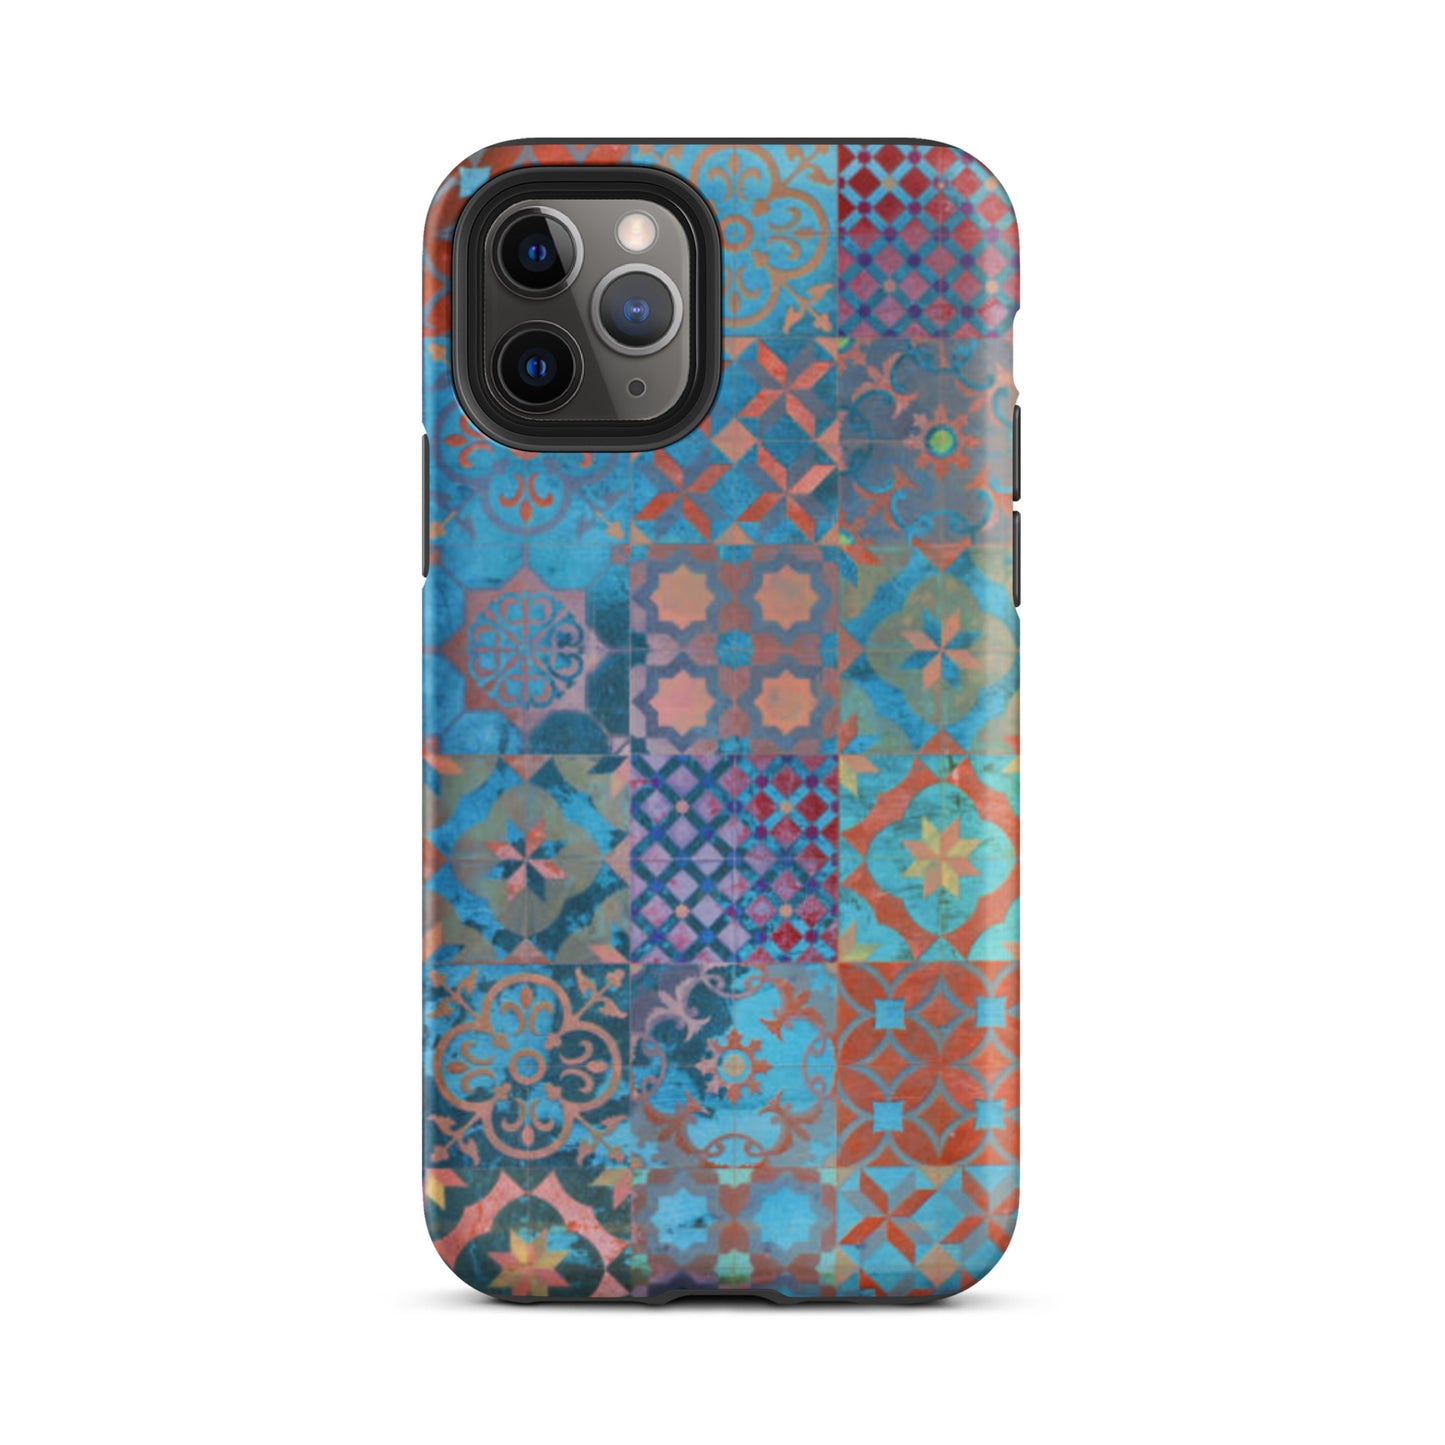 Moroccan Tile Tough iPhone 11 Pro case